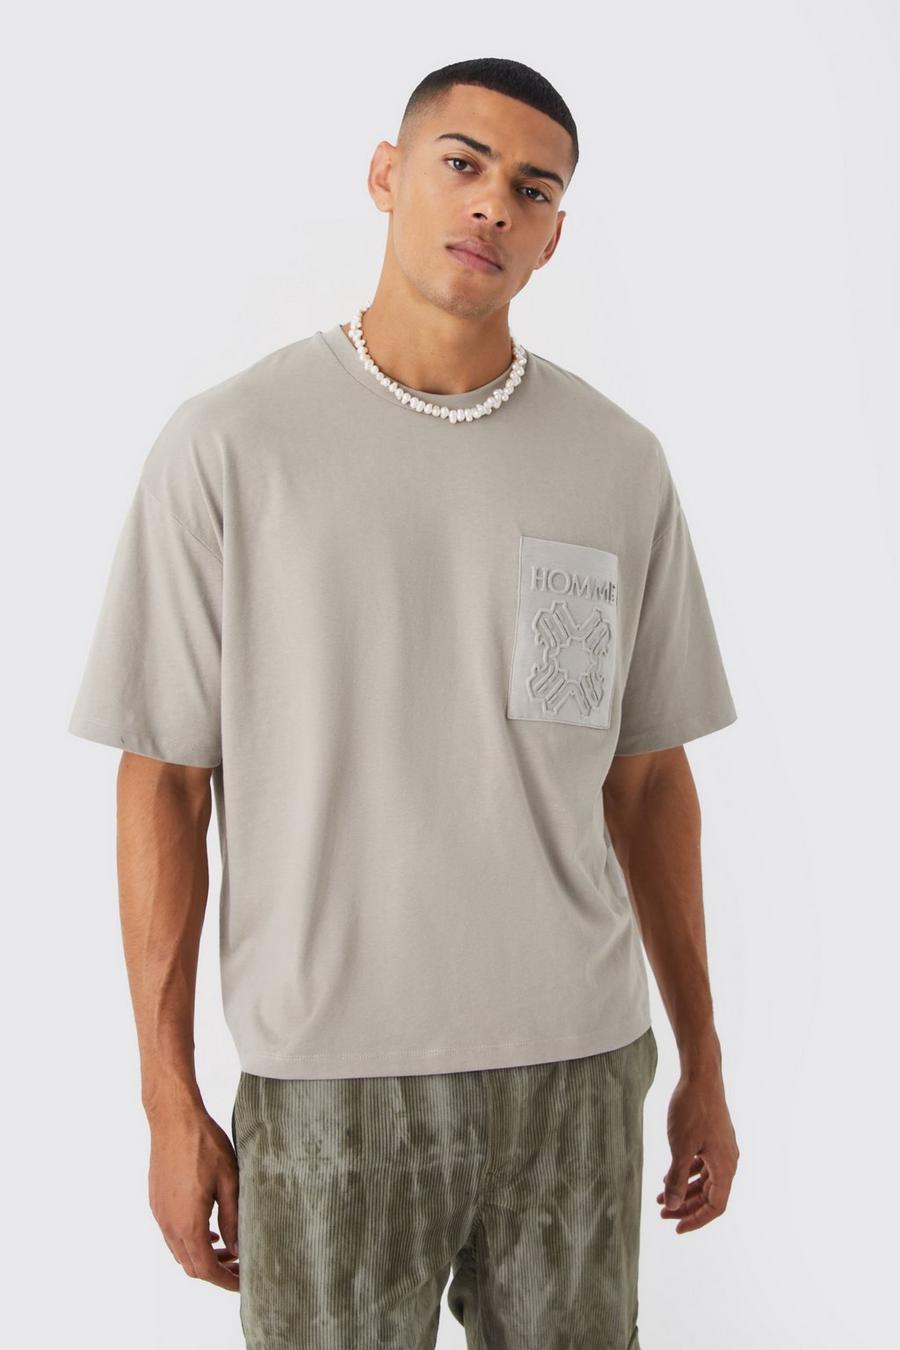 Charcoal grey Boxy Homme Pu Pocket T-shirt